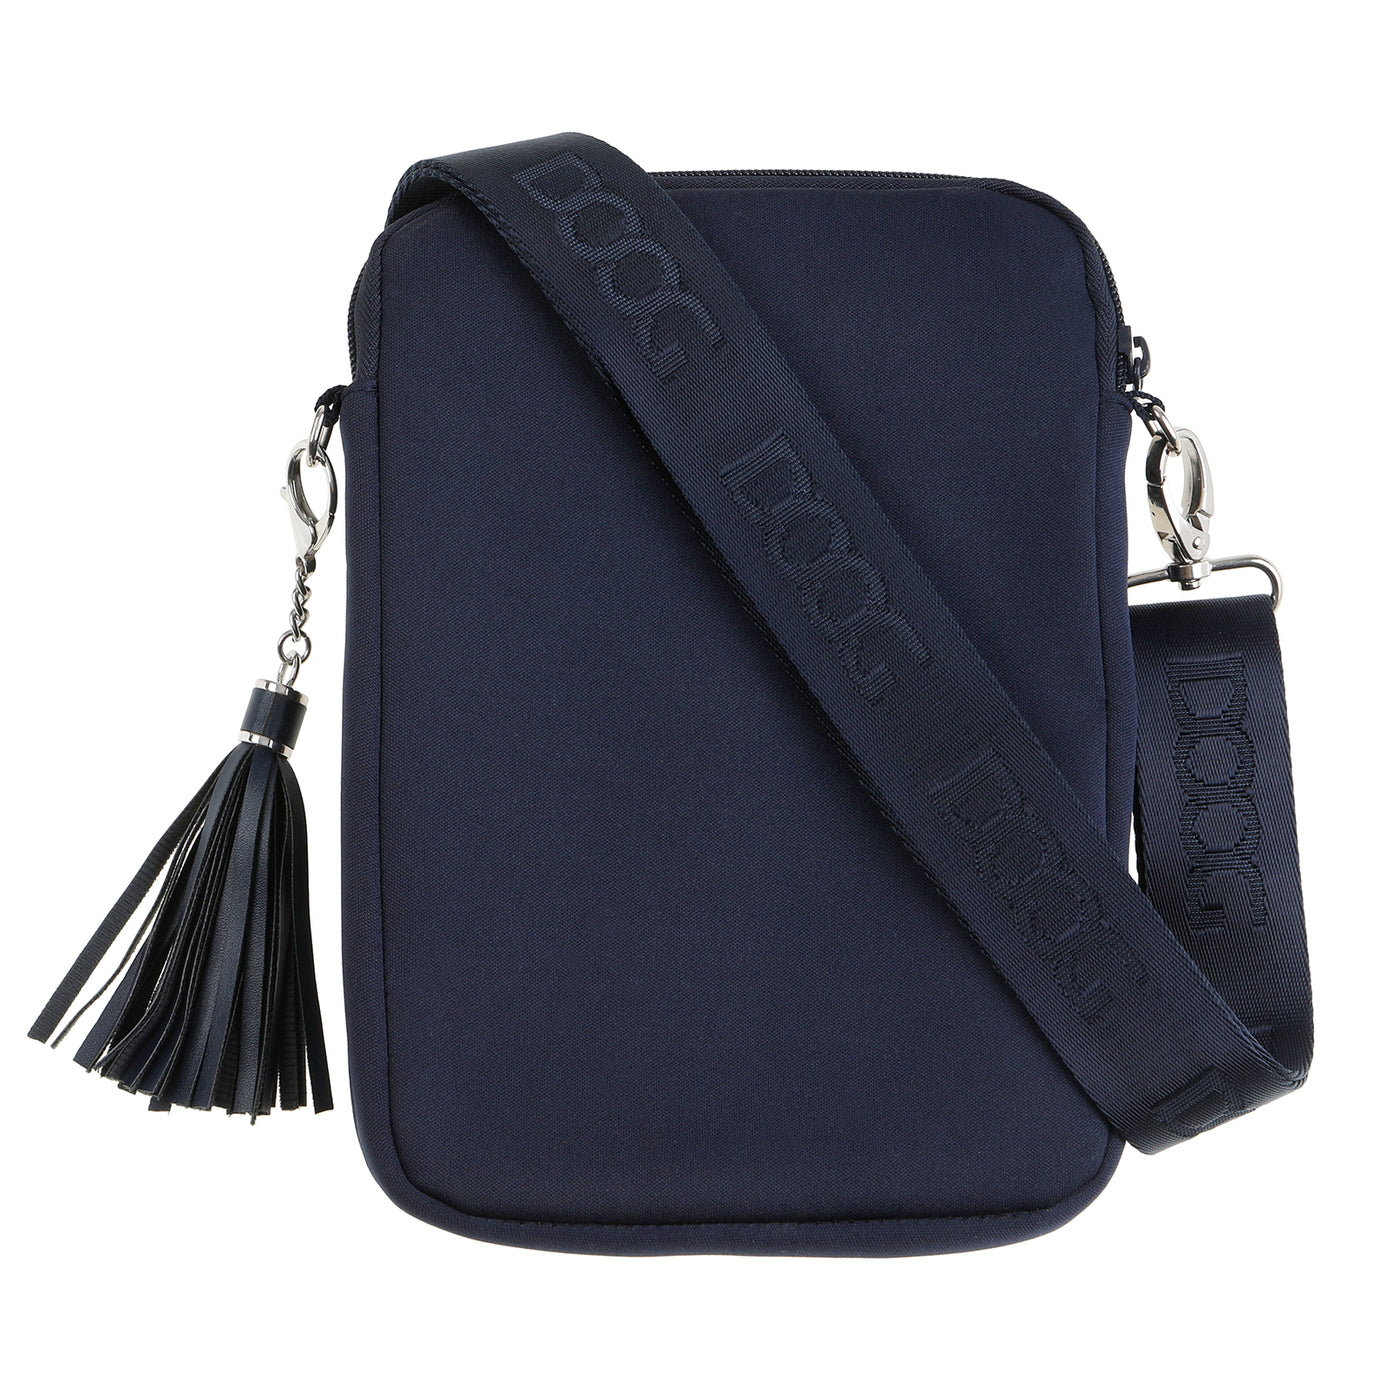 Neosport Walkie Bag - Navy Blue